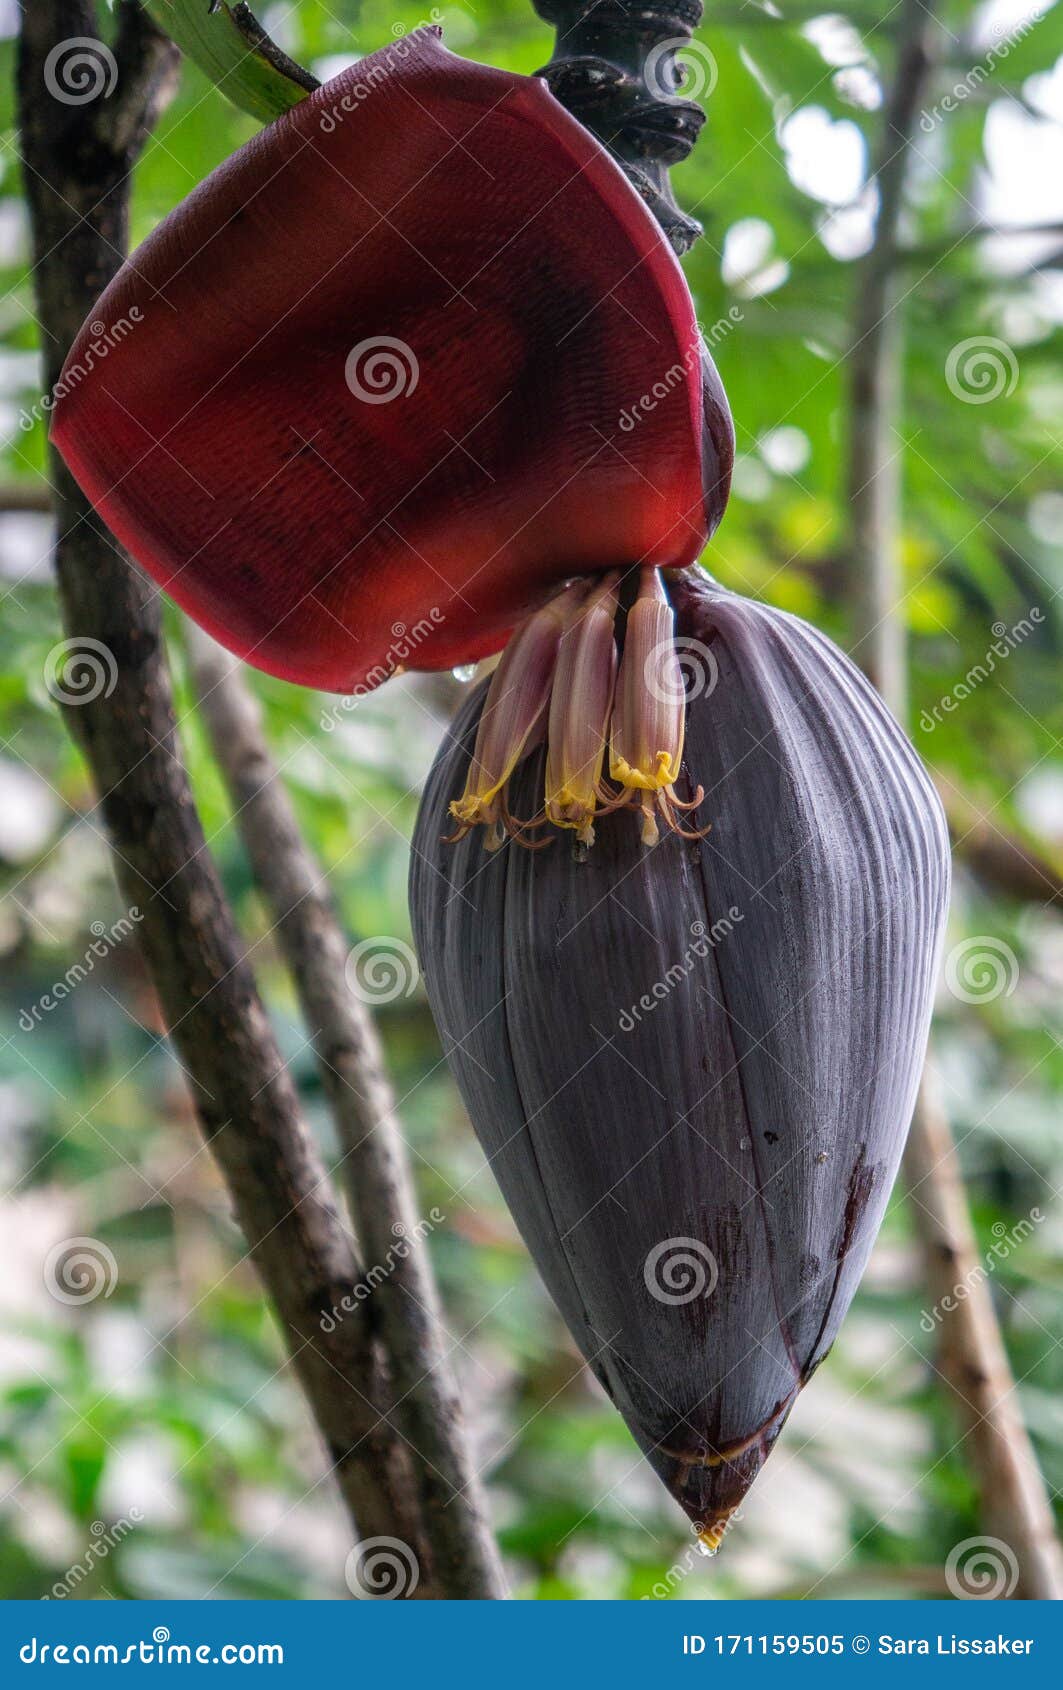 Macro Close Up Of Whole Flower Inflorescence Of Musa Acuminata Plantain Banana Tree Black Pod Stock Image Image Of Fruit Food 171159505,Eastlake Furniture For Sale